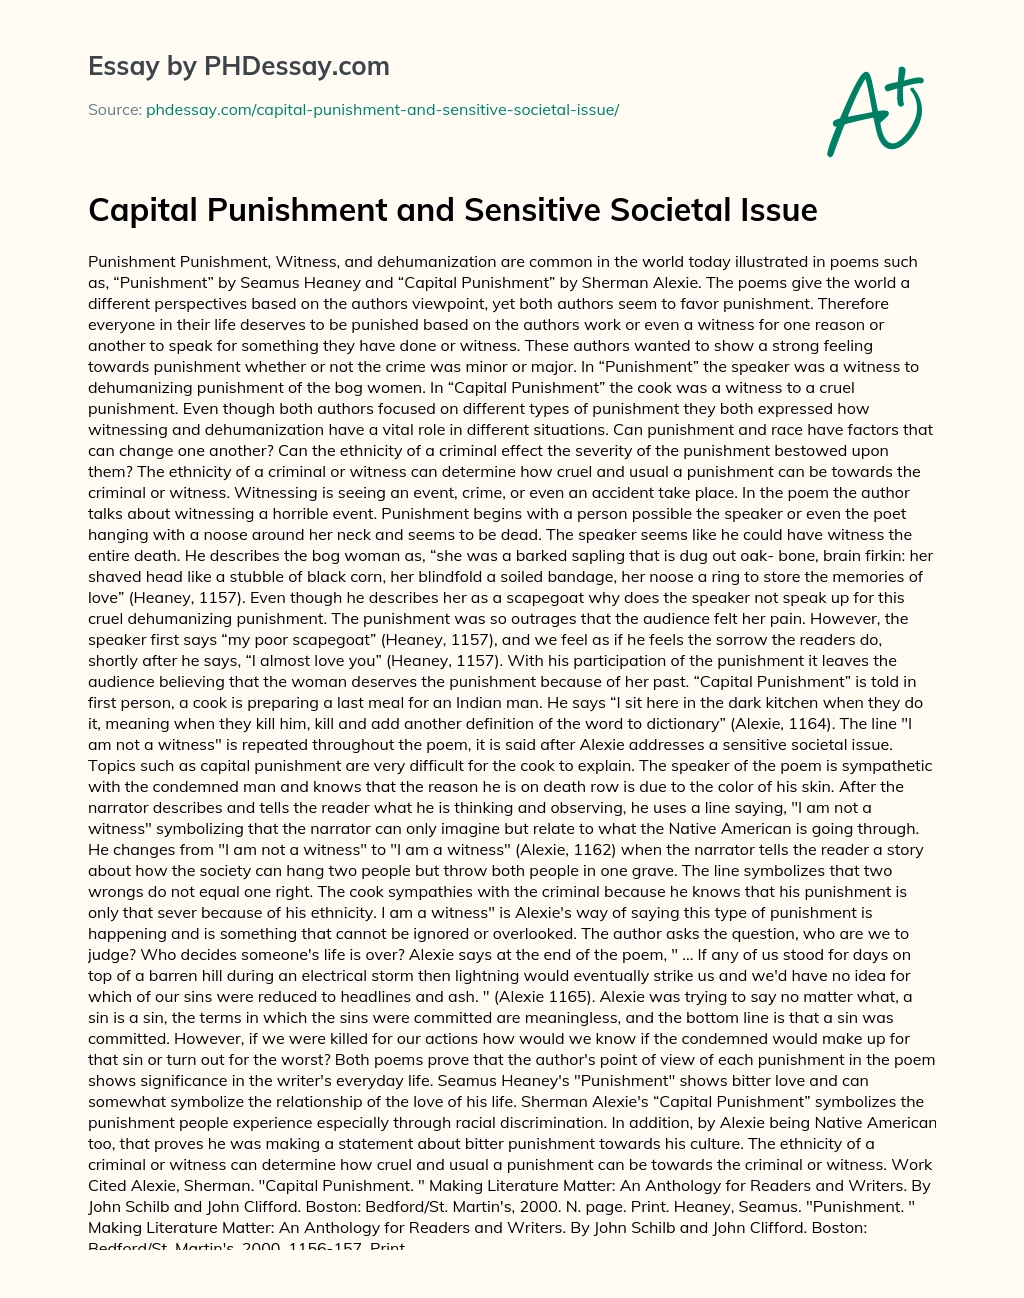 Capital Punishment and Sensitive Societal Issue essay